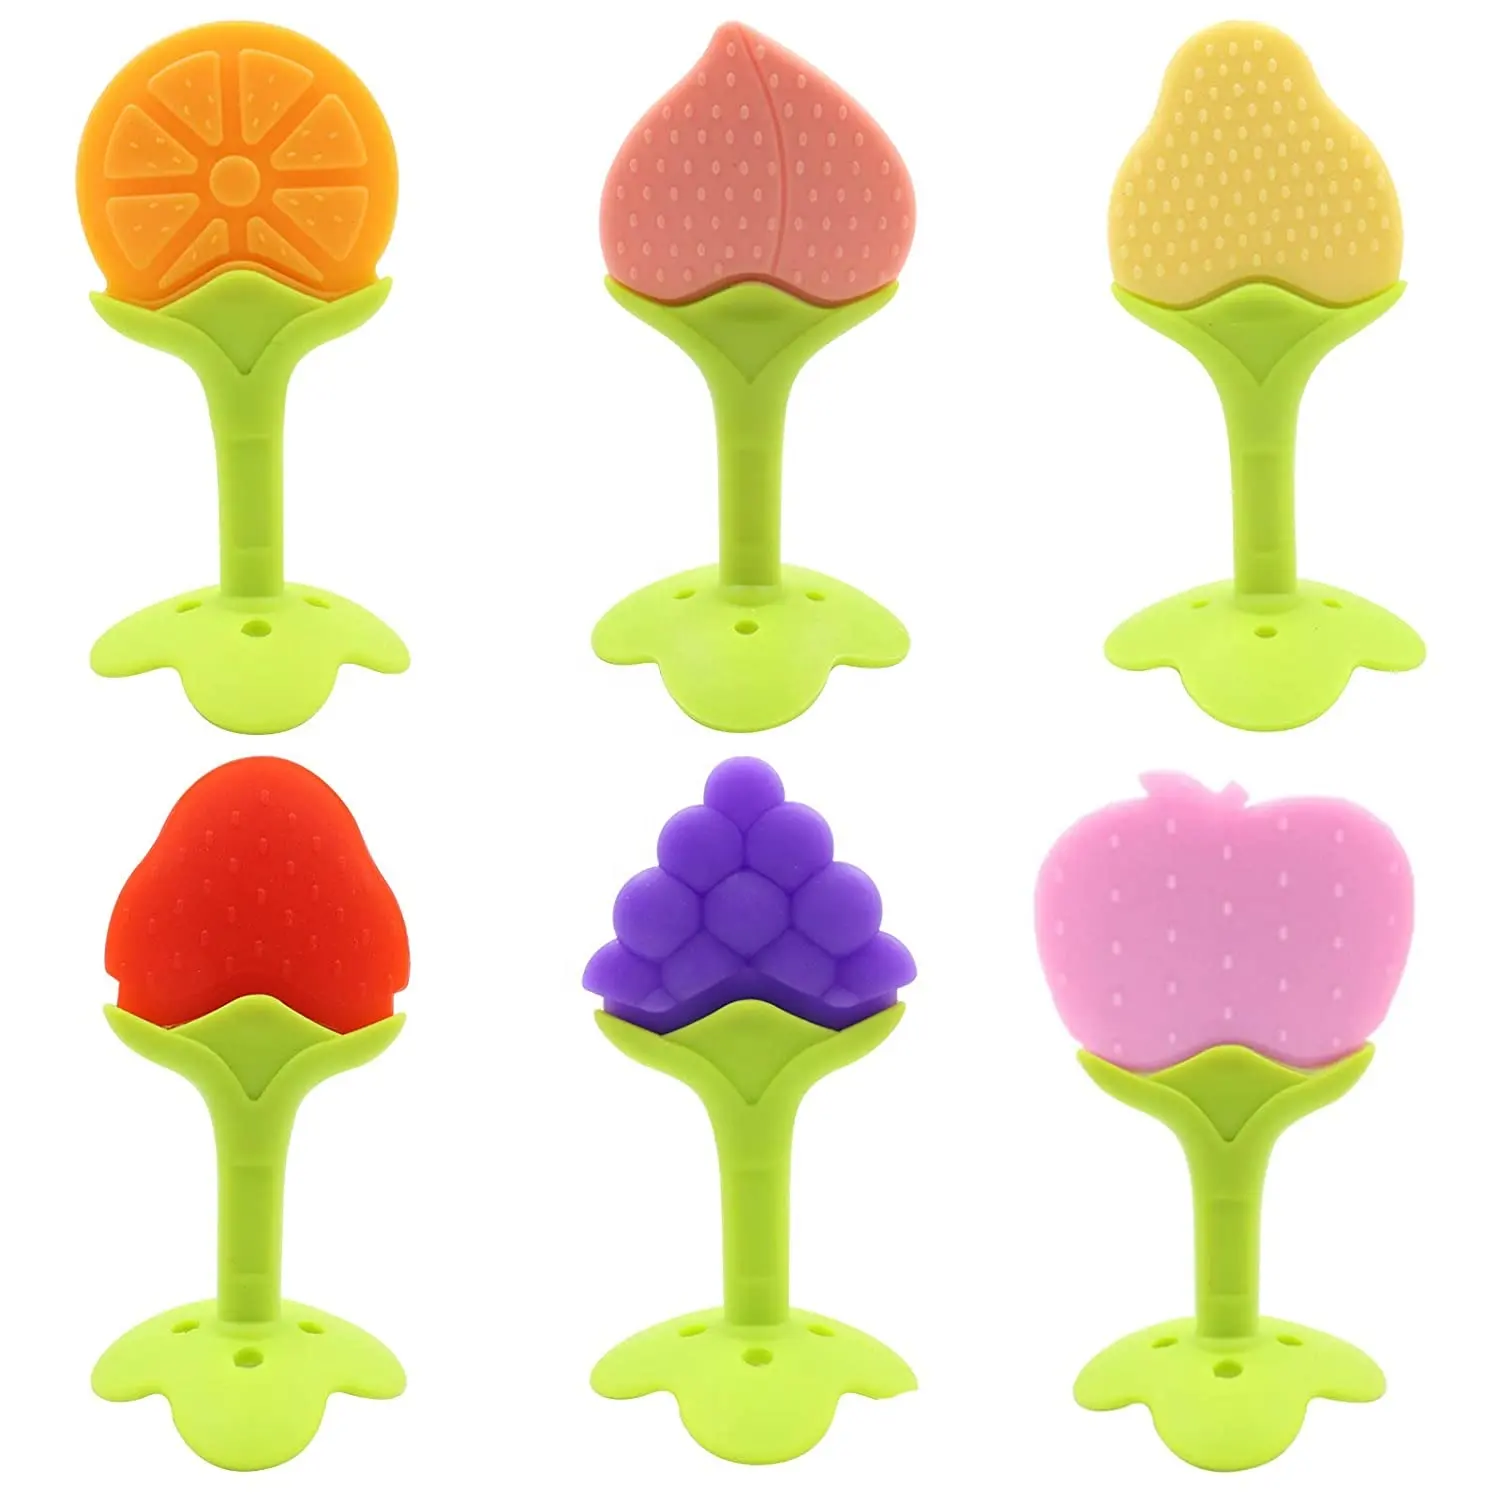 OKSILICONE Directly Buy BPA Free Soft Fruit Teething Toys Silicone Chew Baby Teething Toys